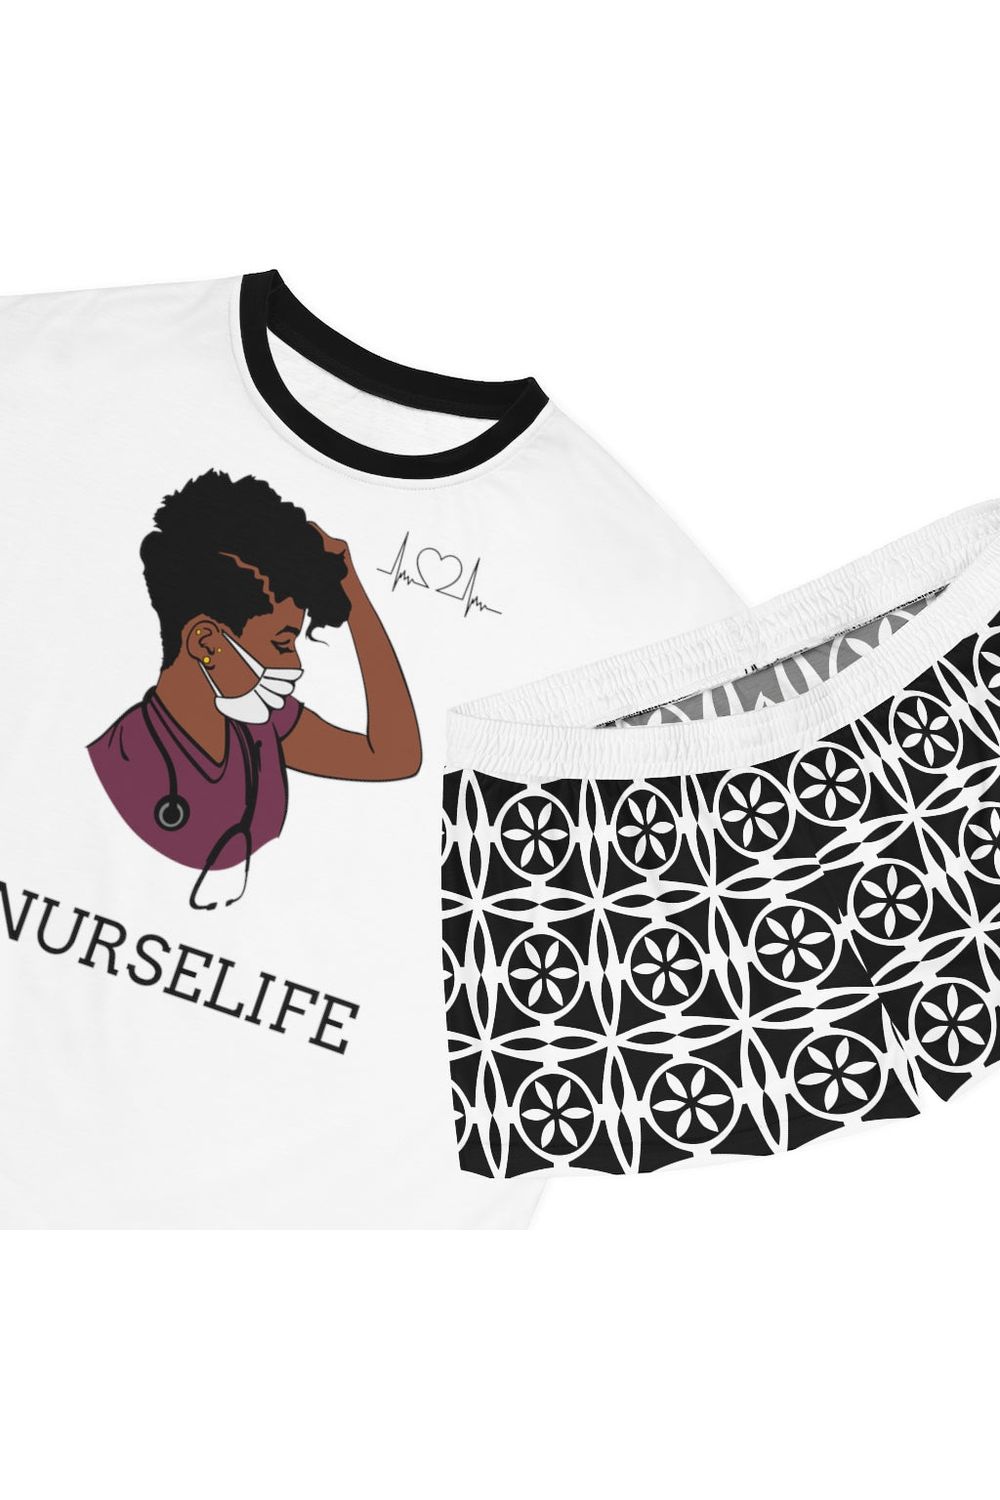 Women's Black and White Shorts Nurse Life Short Pajama Set